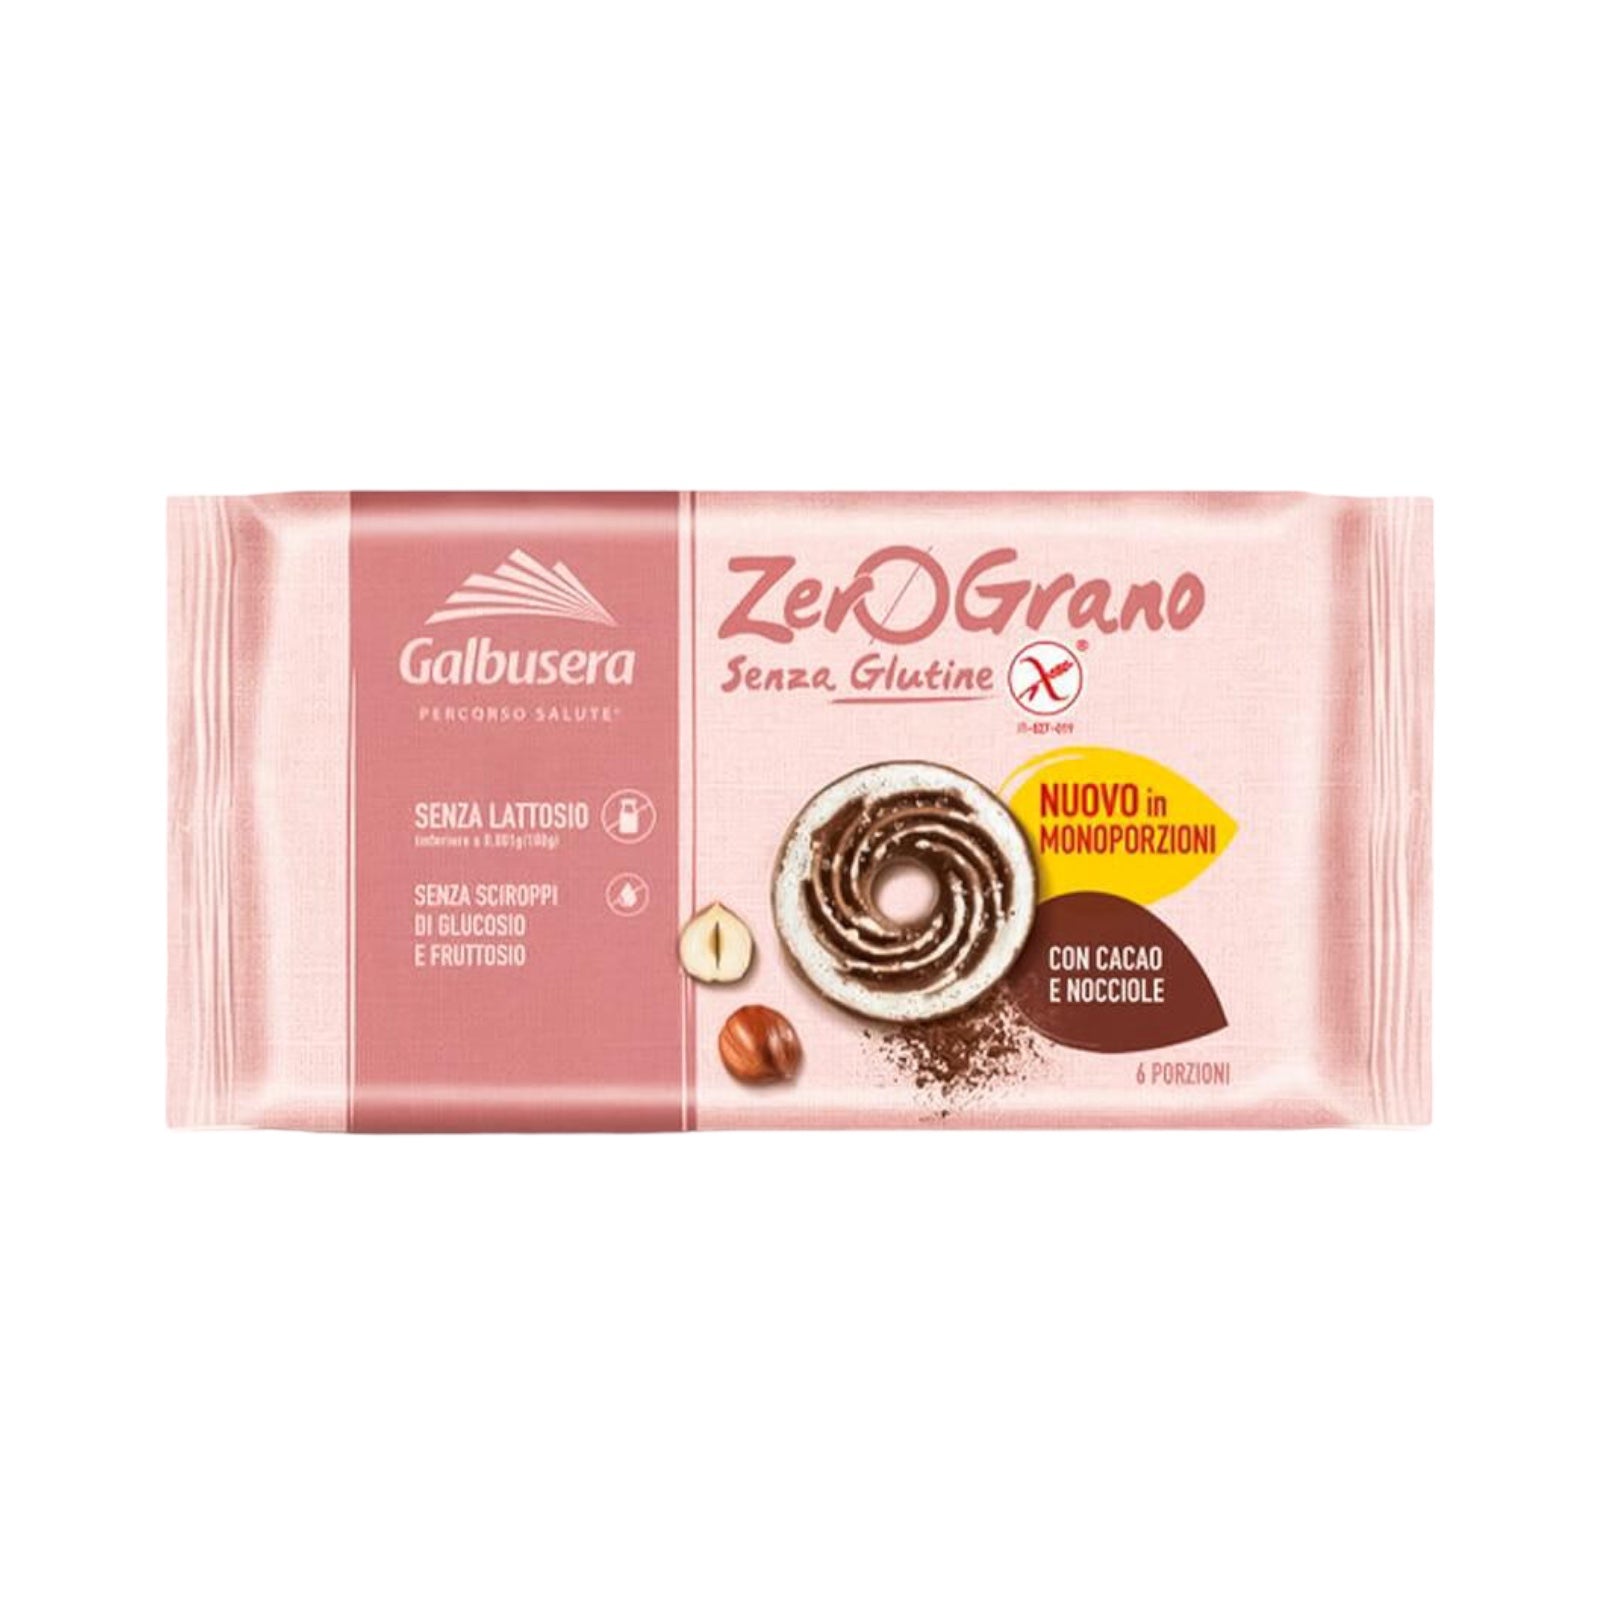 Galbusera ZeroGrano Biscuits Hazelnut and Cocoa Gluten Free – 220 gr